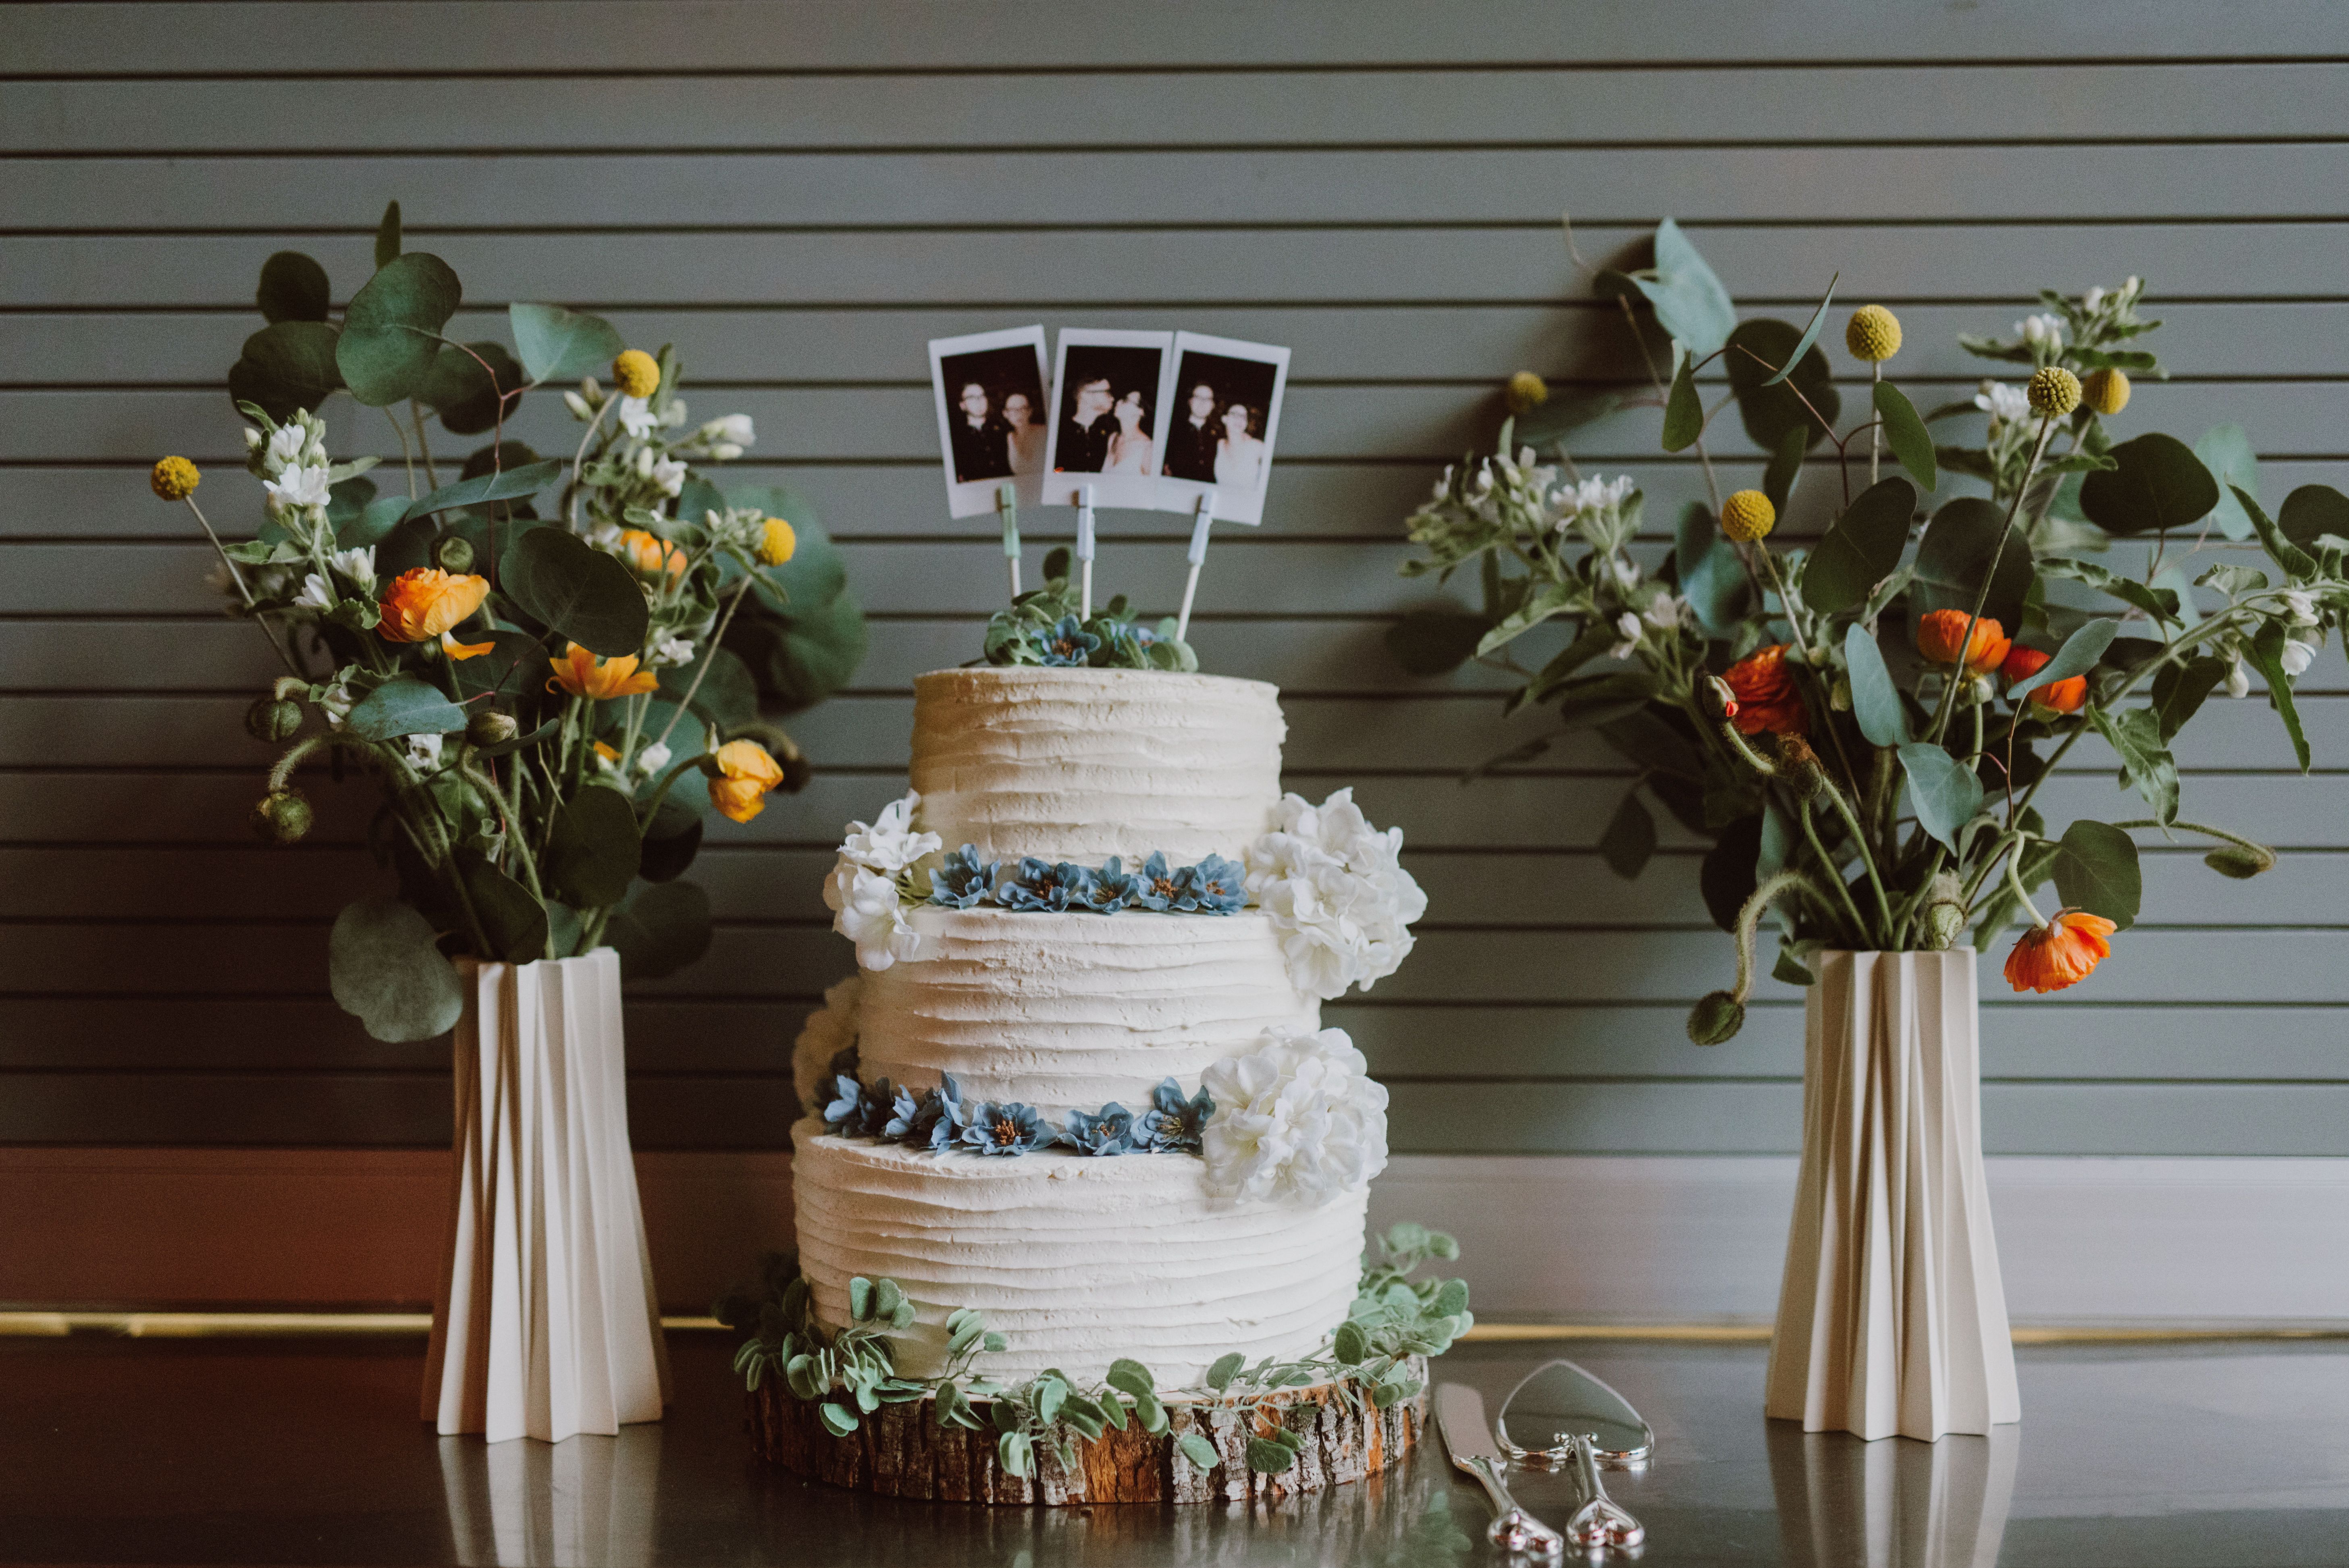 Camp Angelos wedding cake